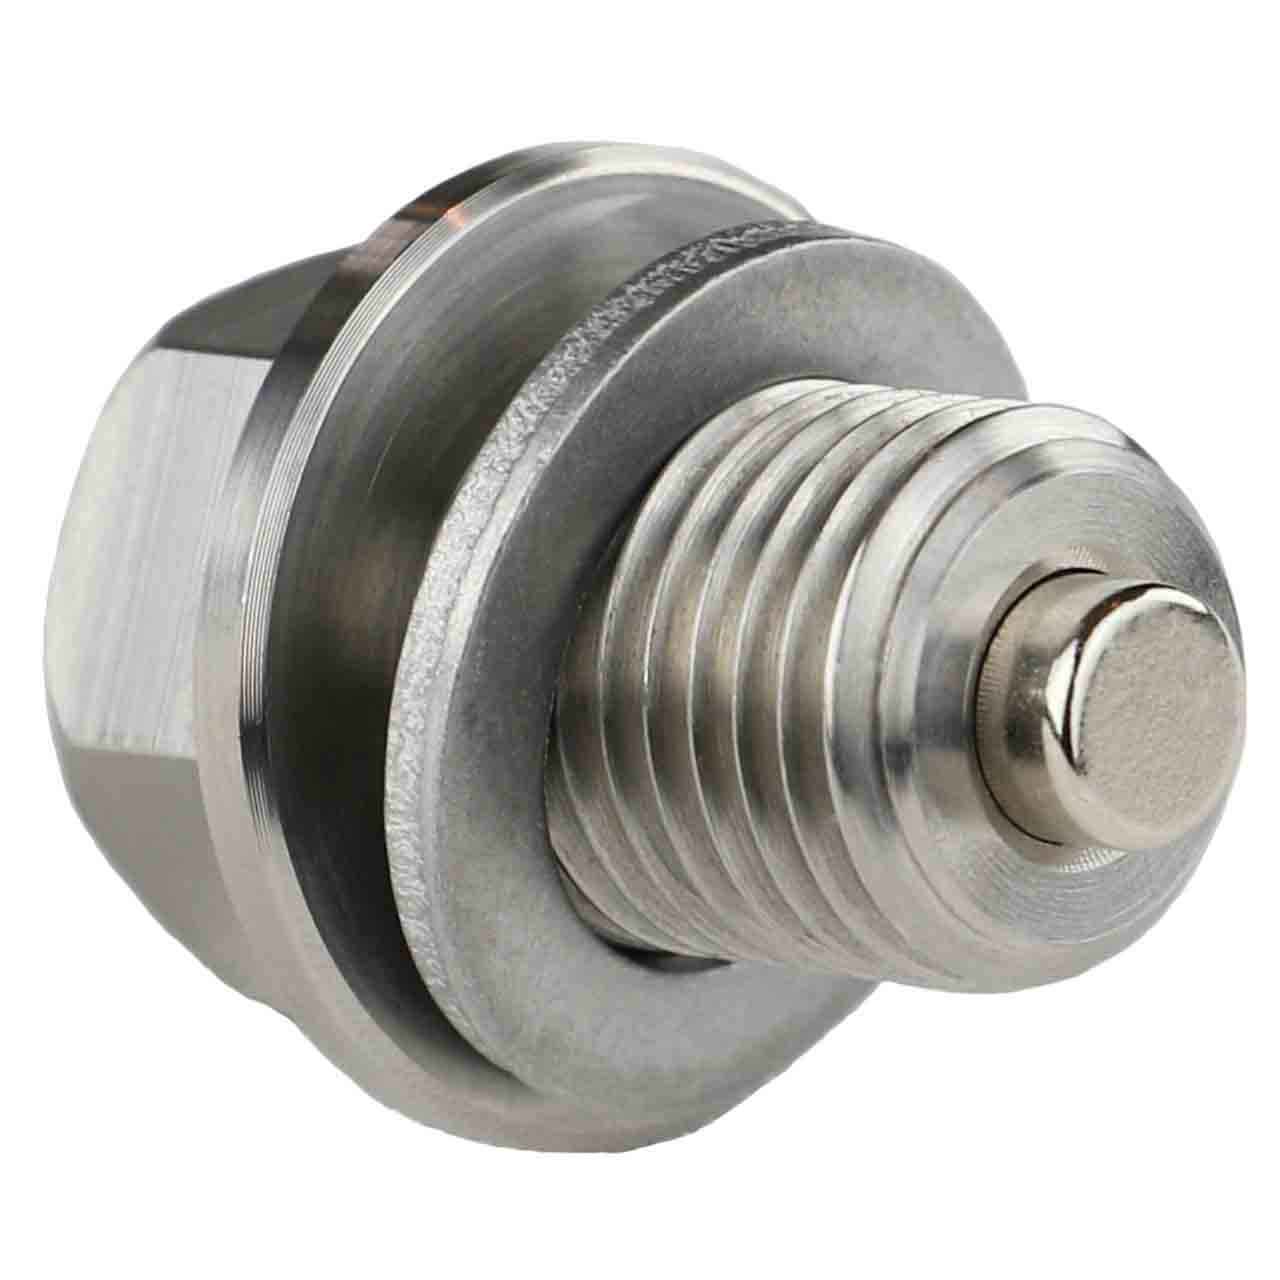 Suzuki Vitara Magnetic Oil Drain Plug - 1999-2003 - 2.0 Liter - 4 Cylinder - Made In USA - Stainless Steel - Part Number 09247-14044